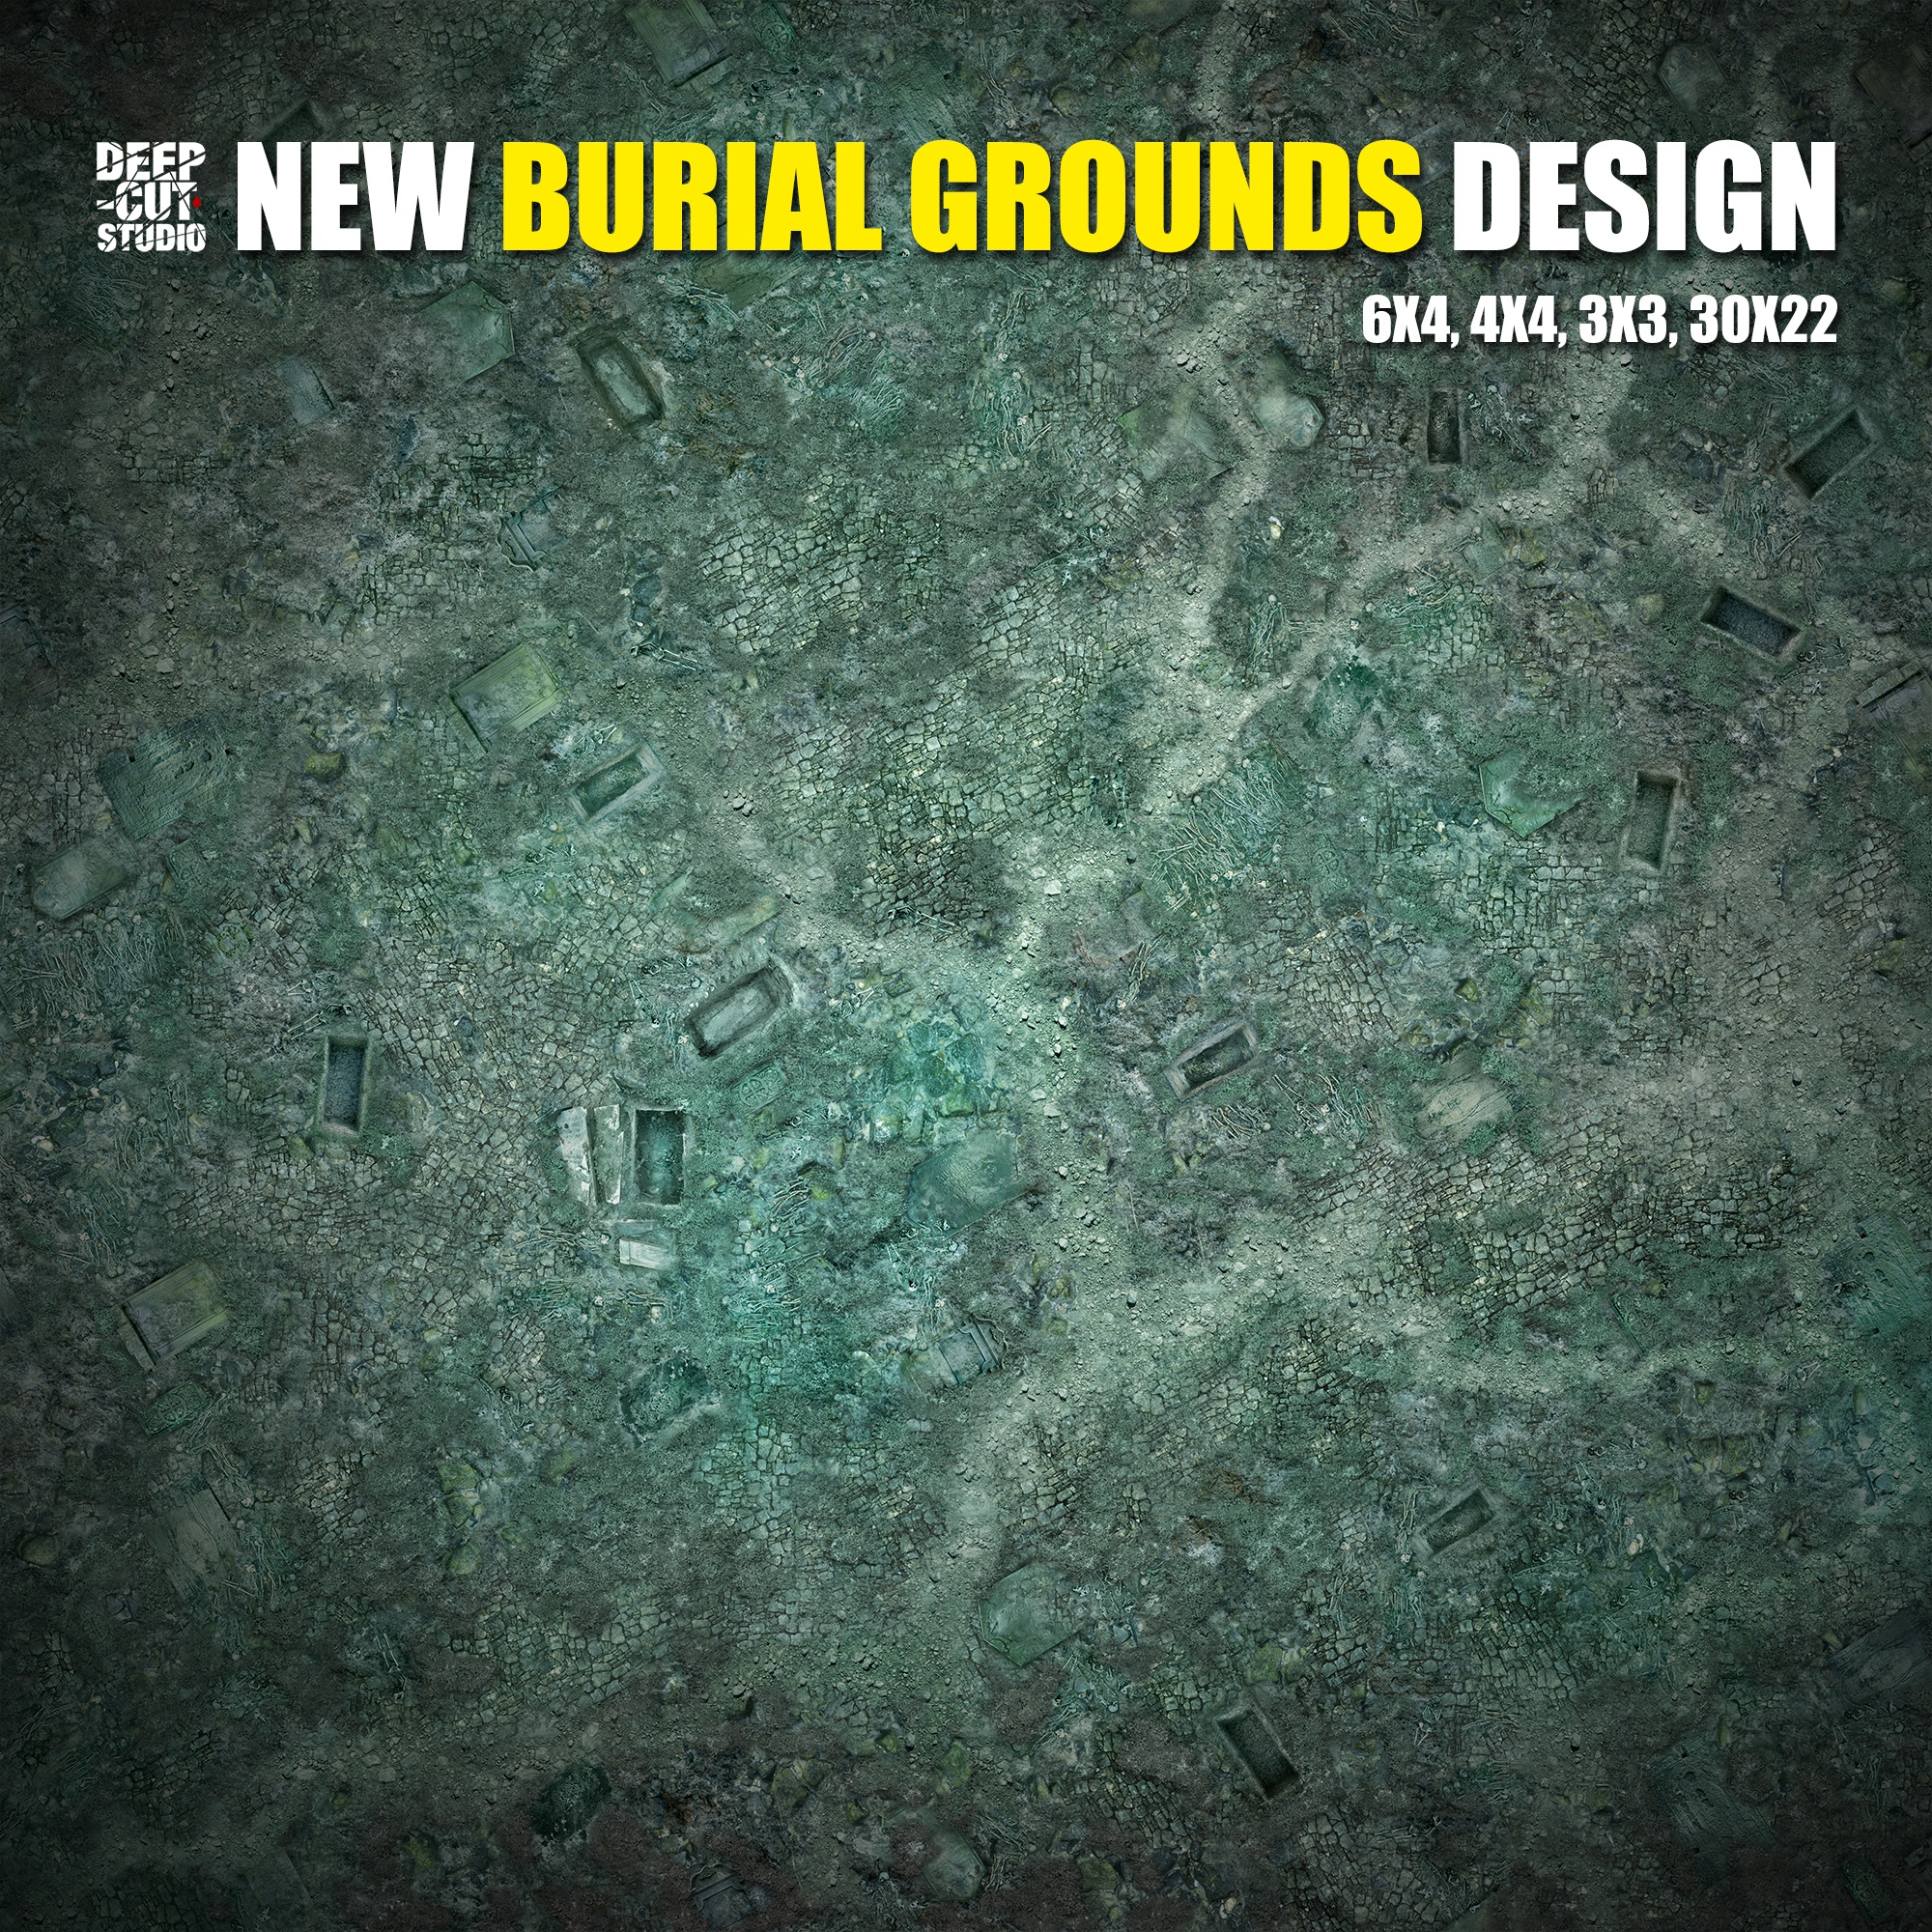 Burial Grounds Gaming Mat - Deep-Cut Studio